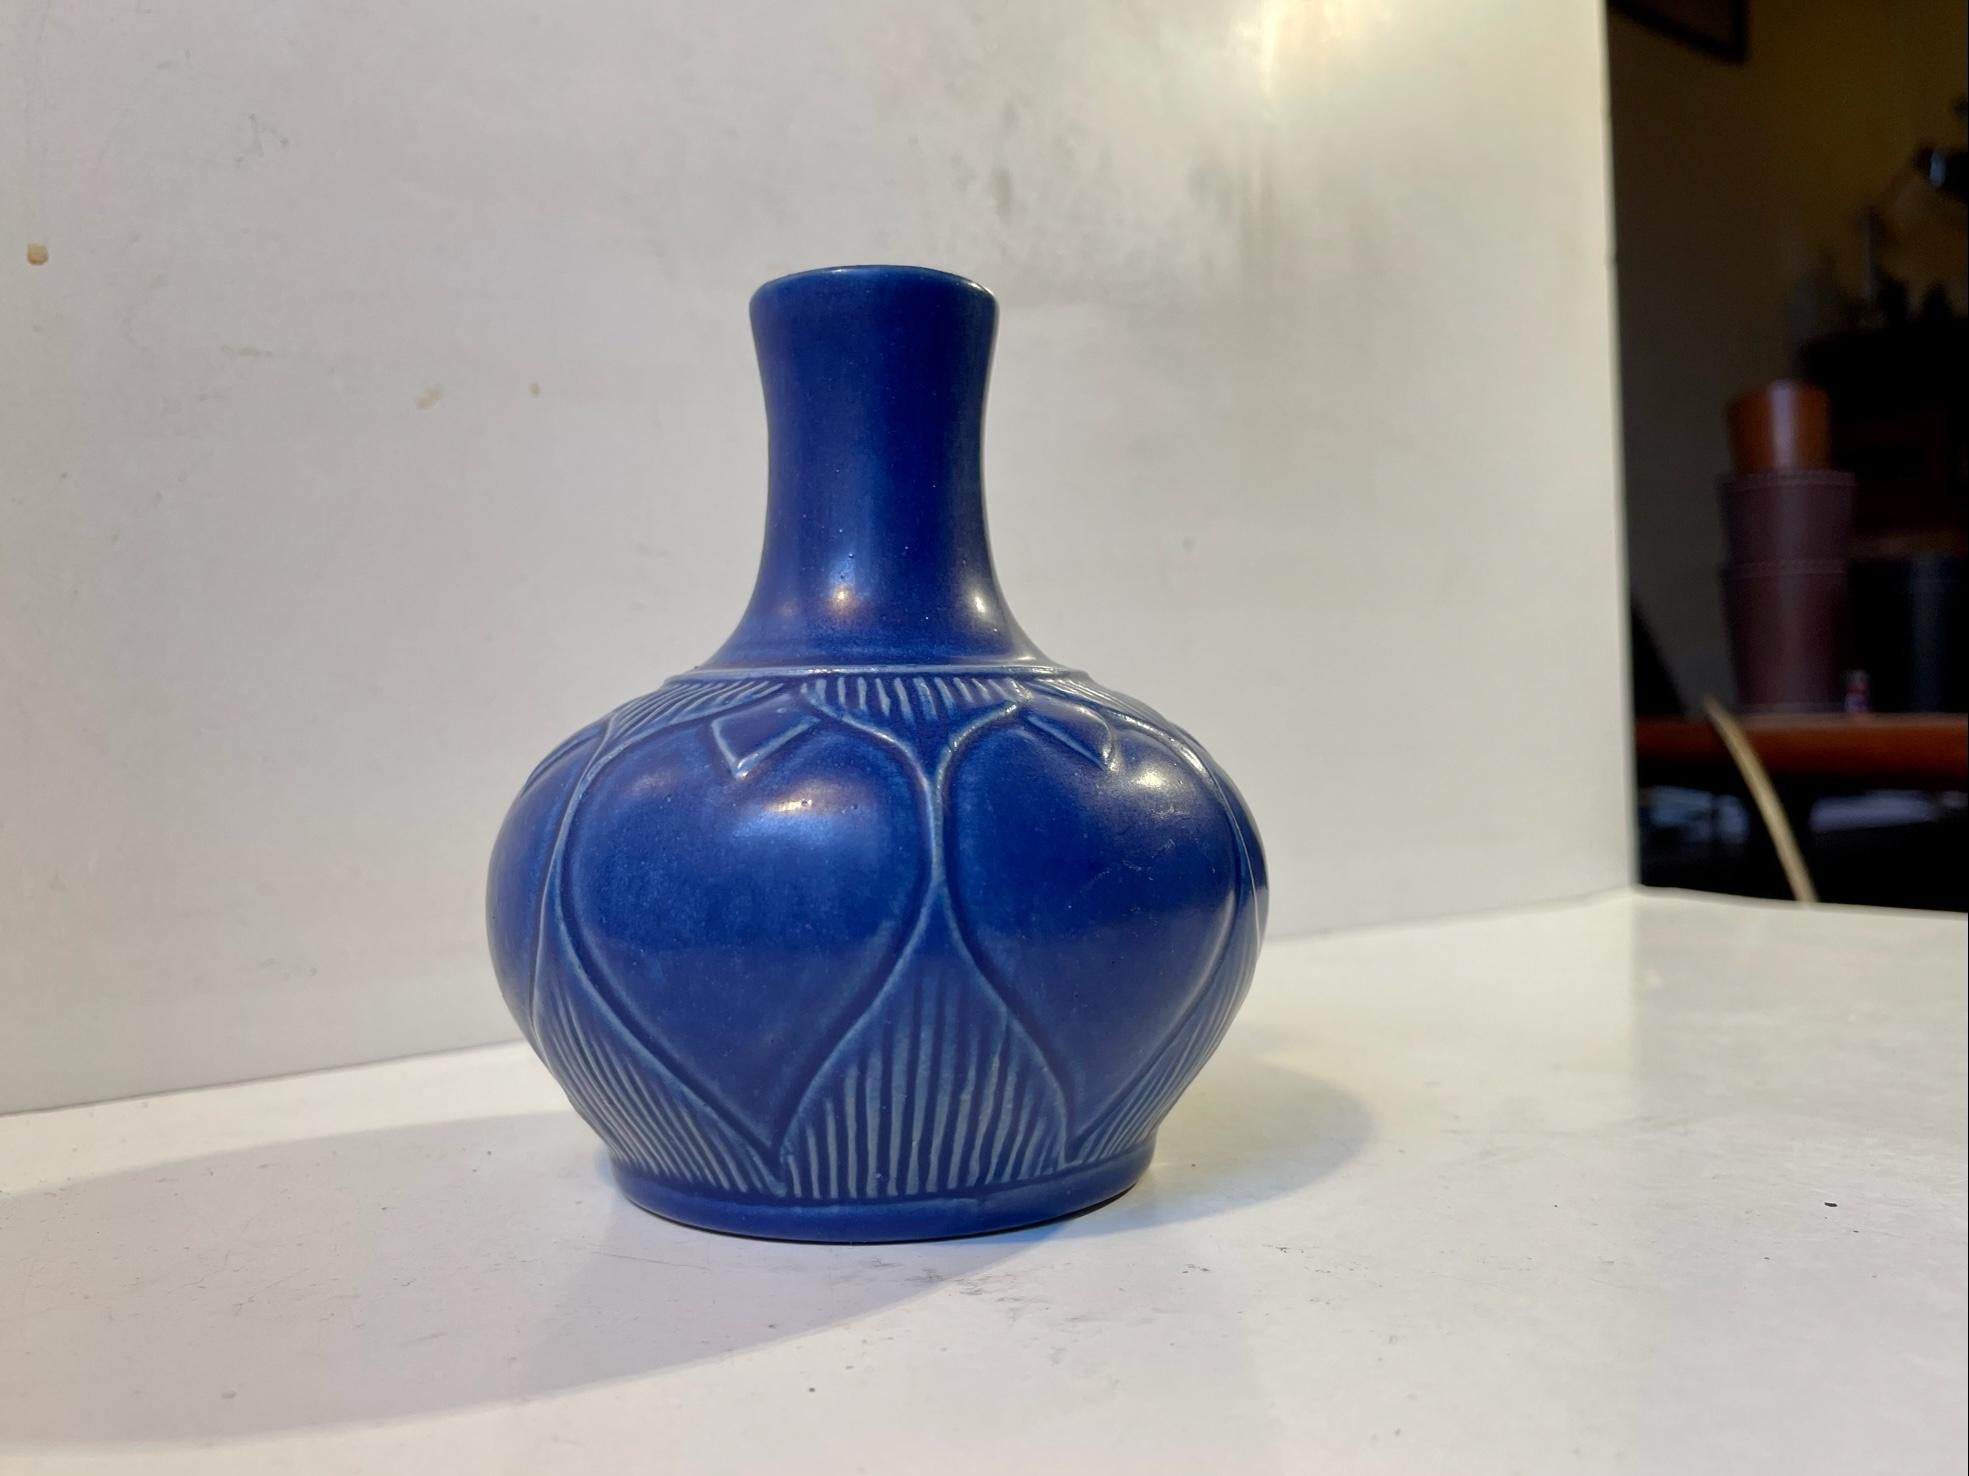 Scandinavian Modern Scandinavian Stoneware Vase with Blue Glaze from Lauritz Hjorth, 1950s For Sale